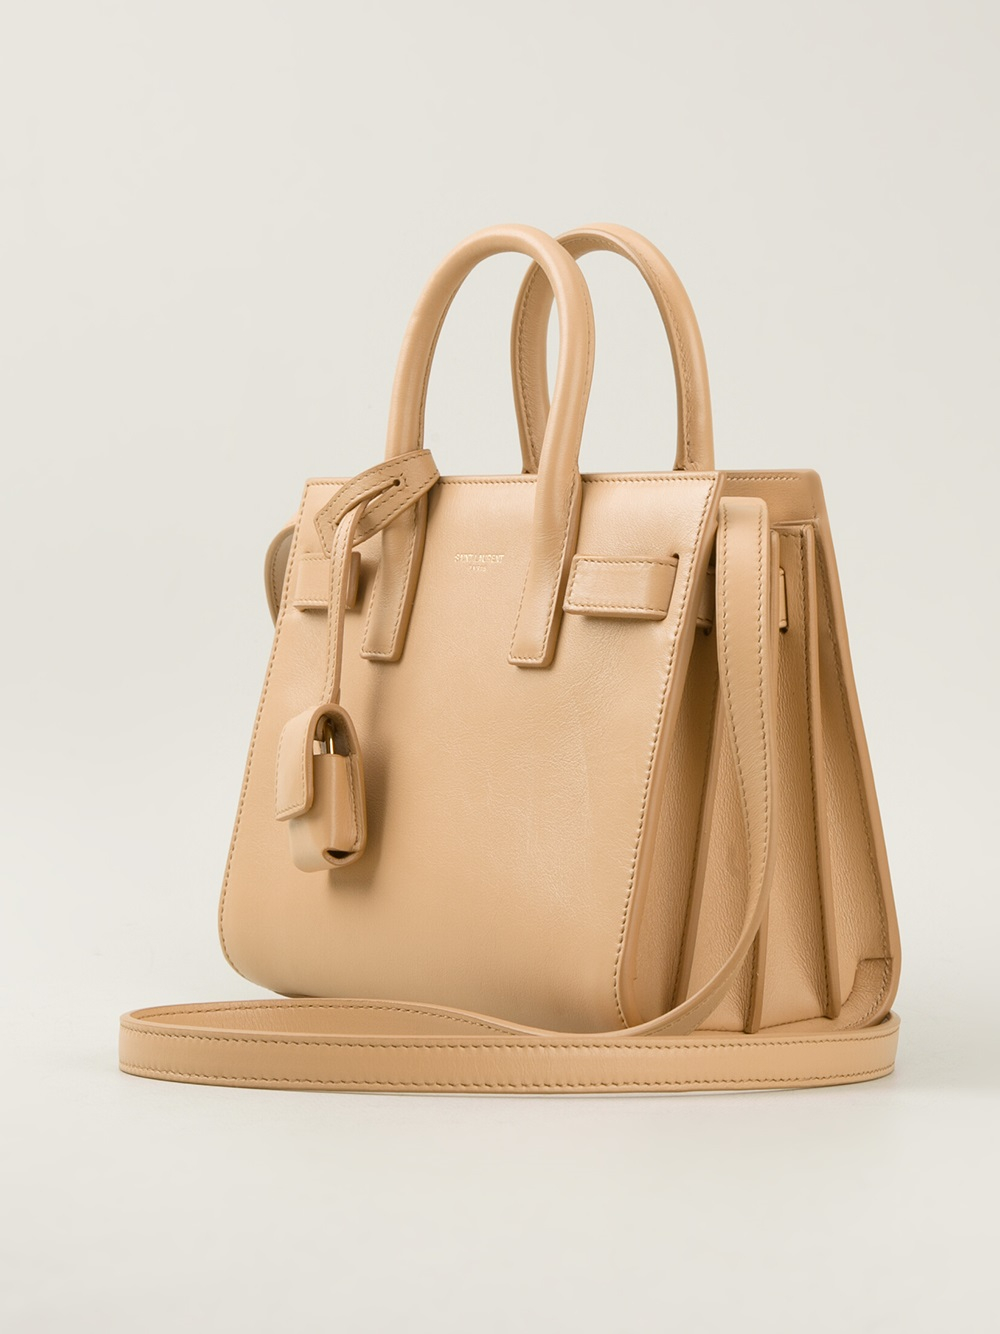 y handbags - classic baby sac de jour bag in yellow leather